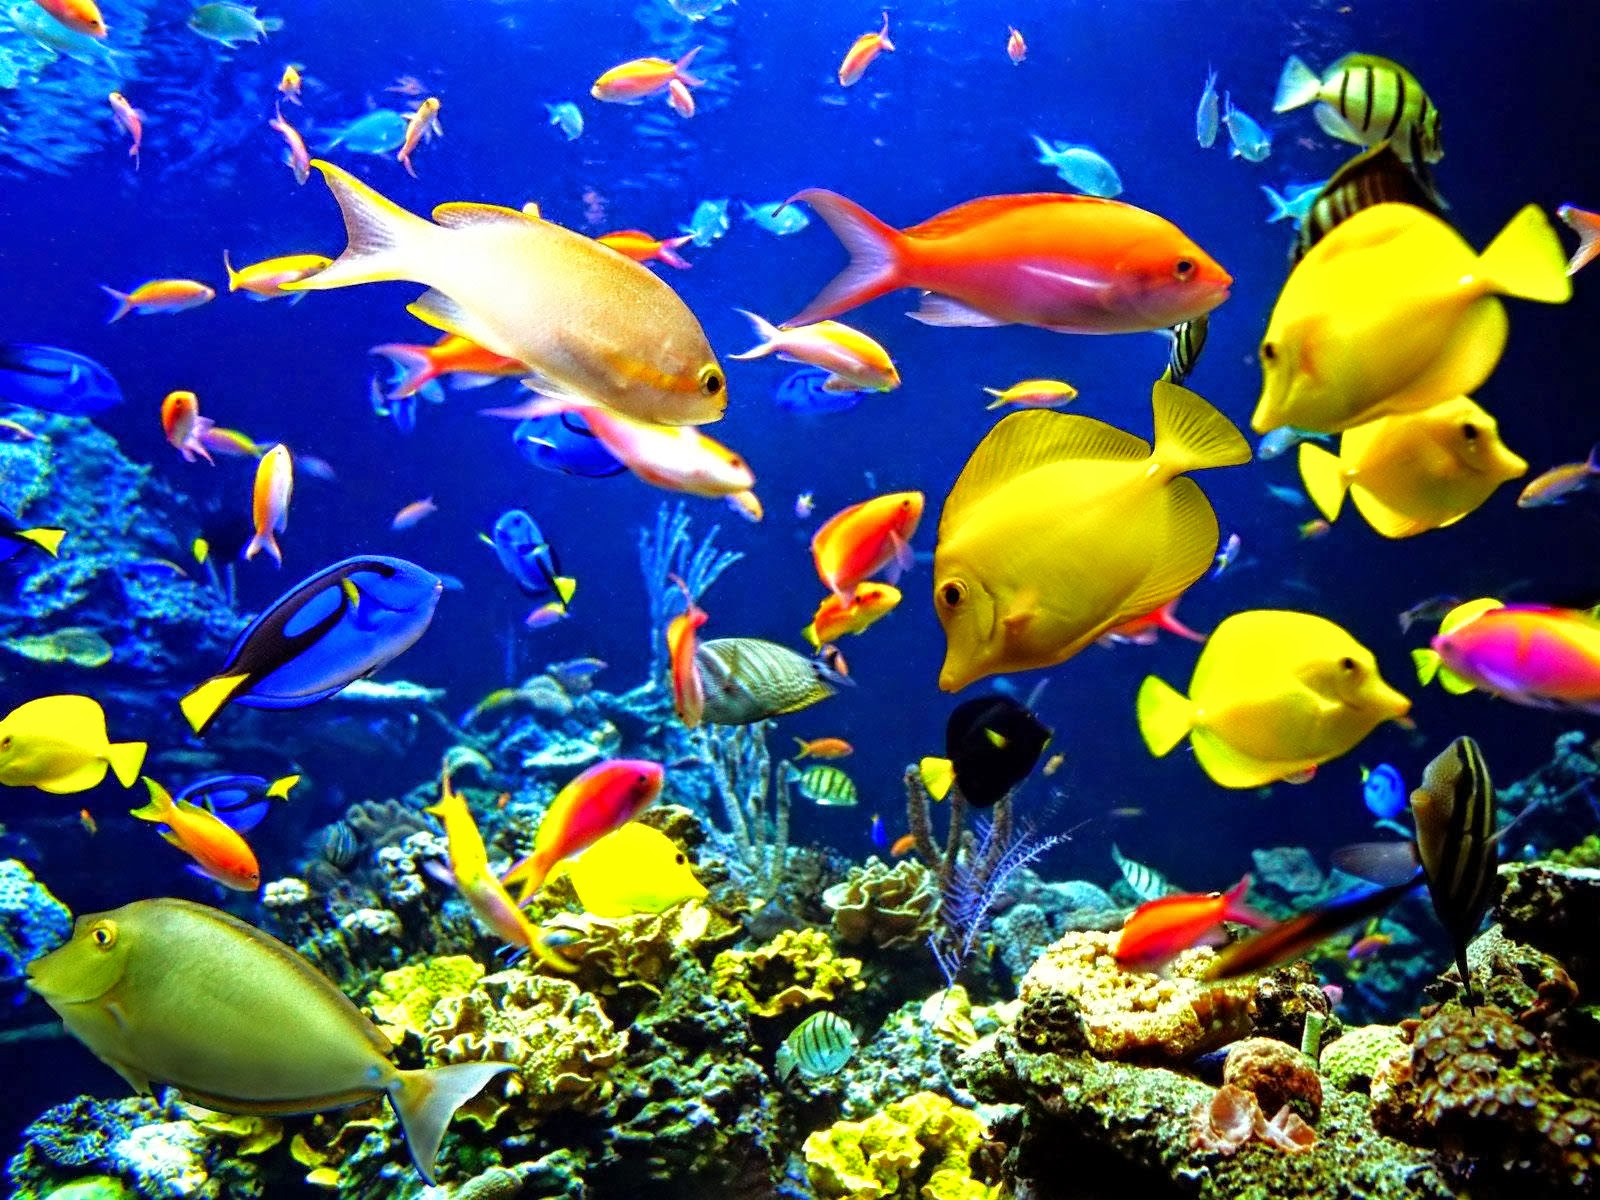 barriera corallina wallpaper hd,pesce,barriera corallina,pesci di barriera corallina,subacqueo,biologia marina